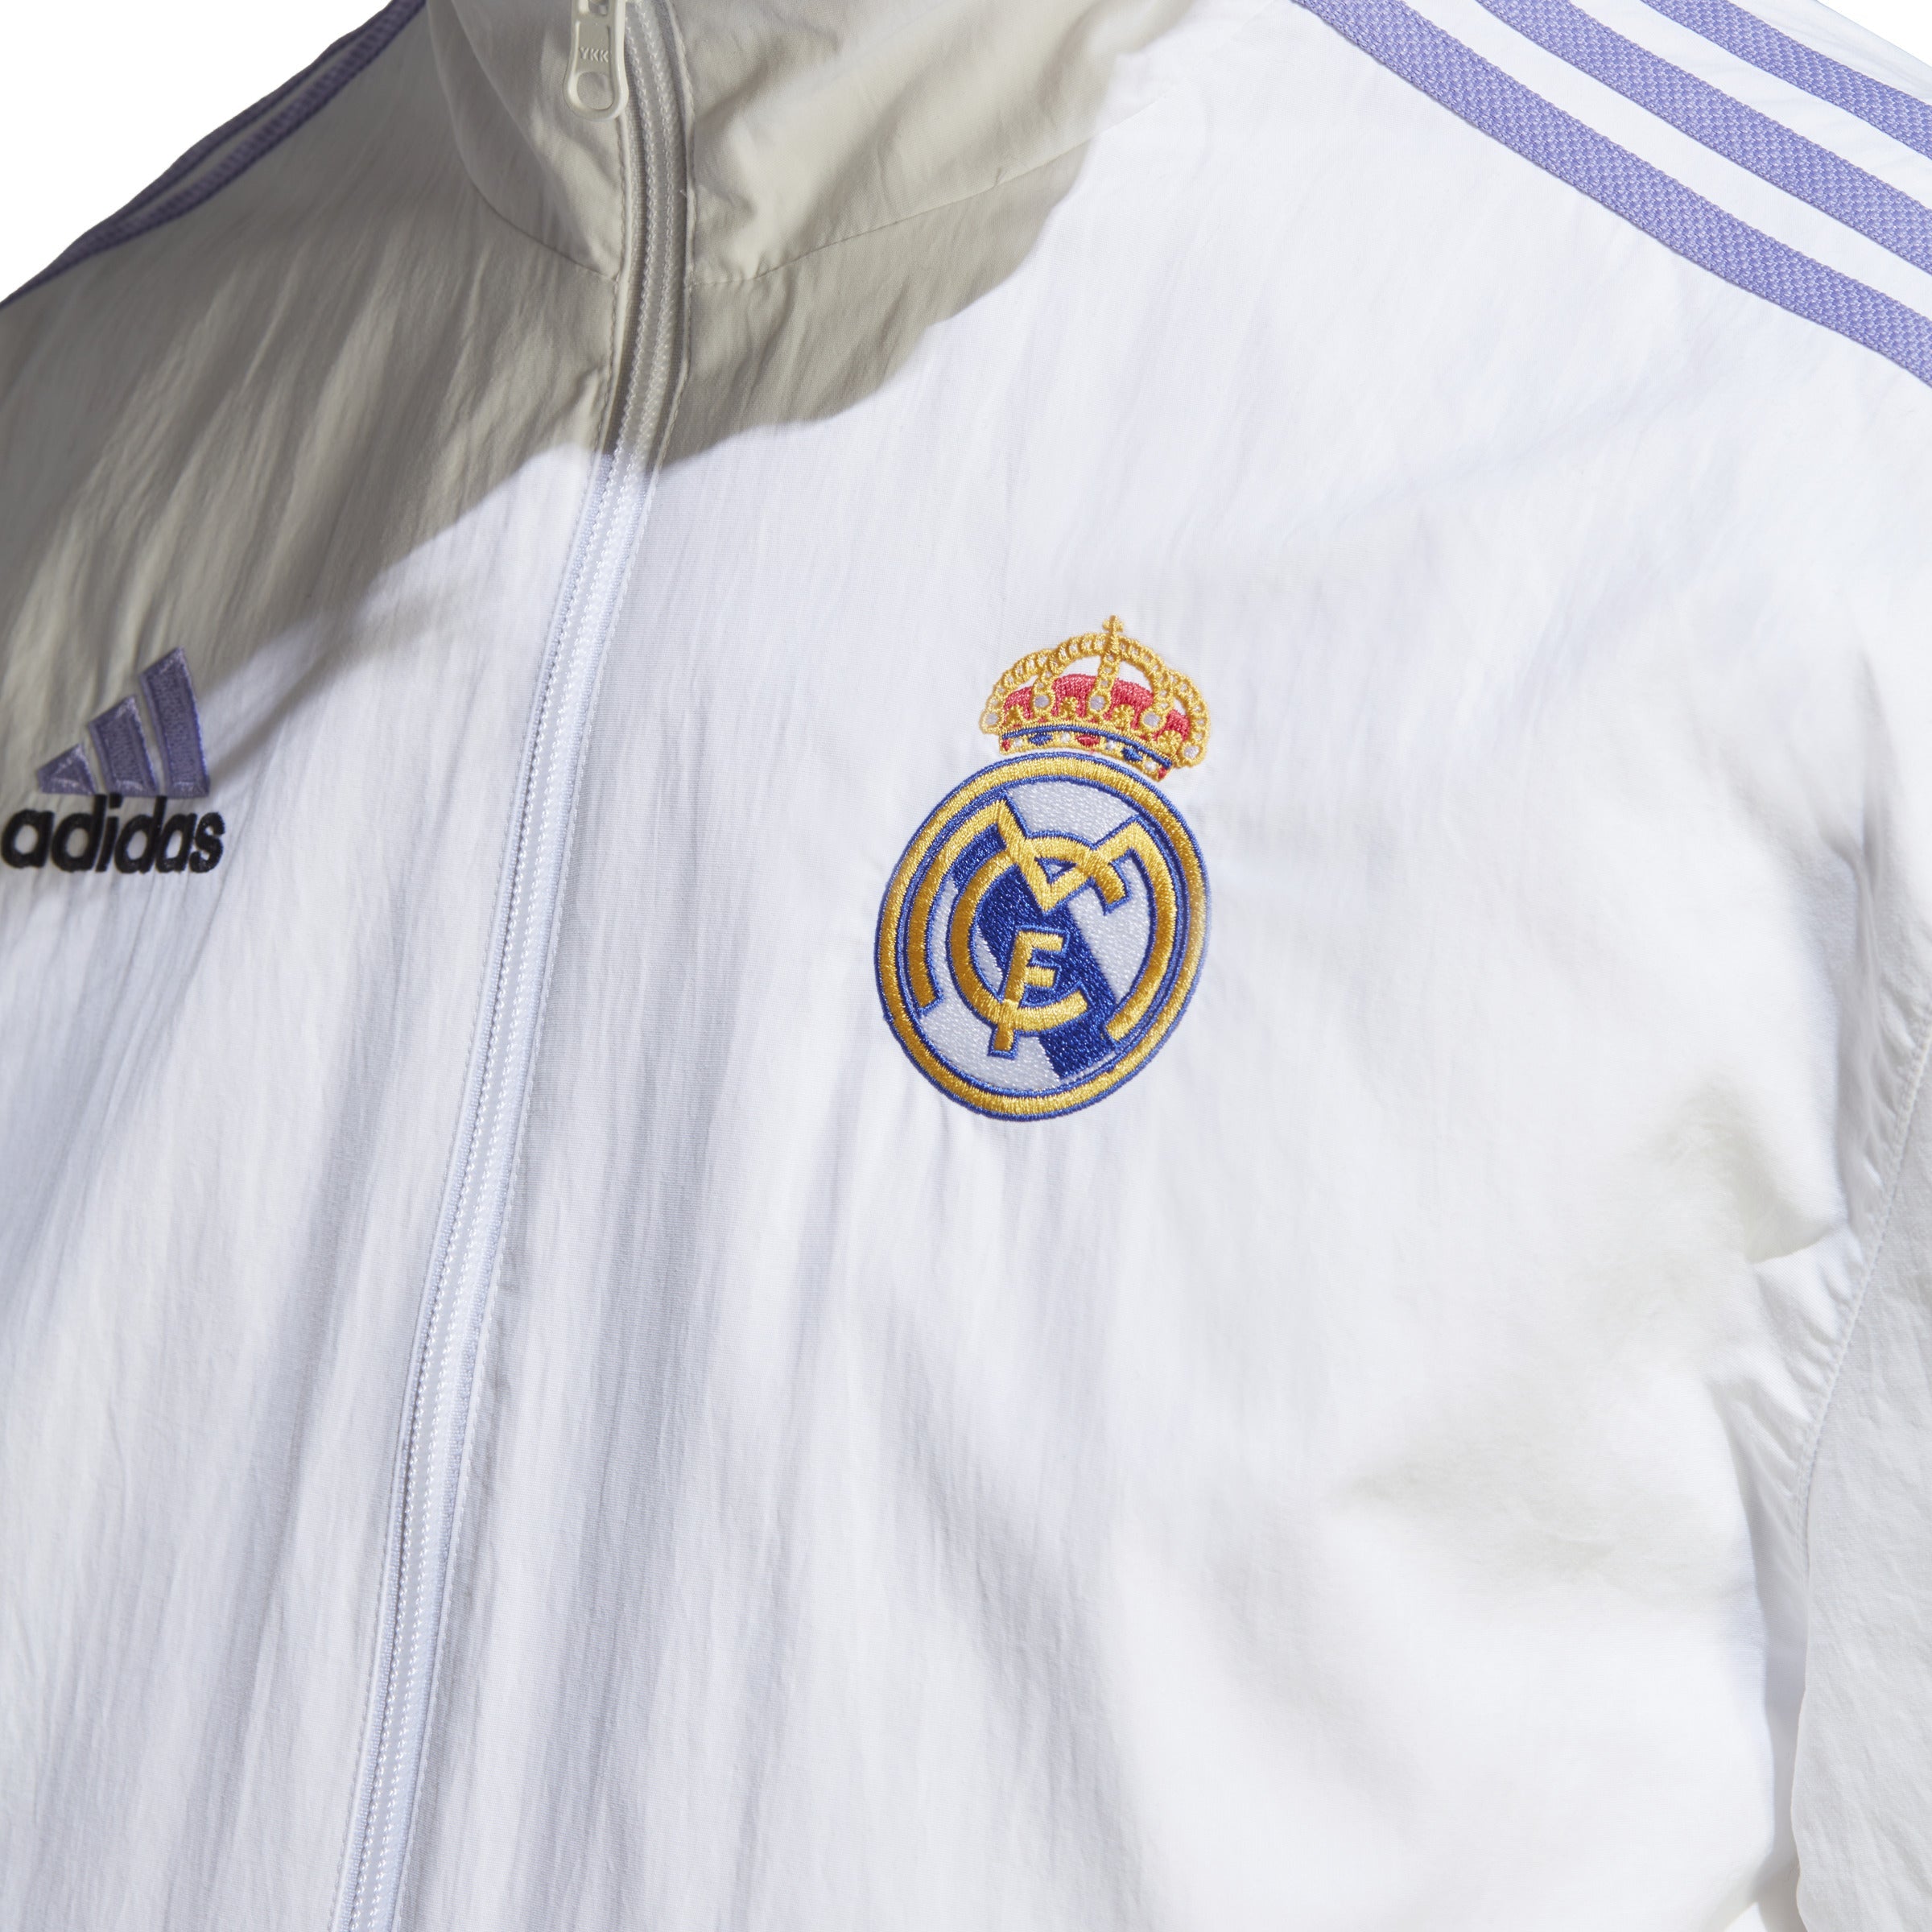 adidas Real Madrid Anthem Jacket